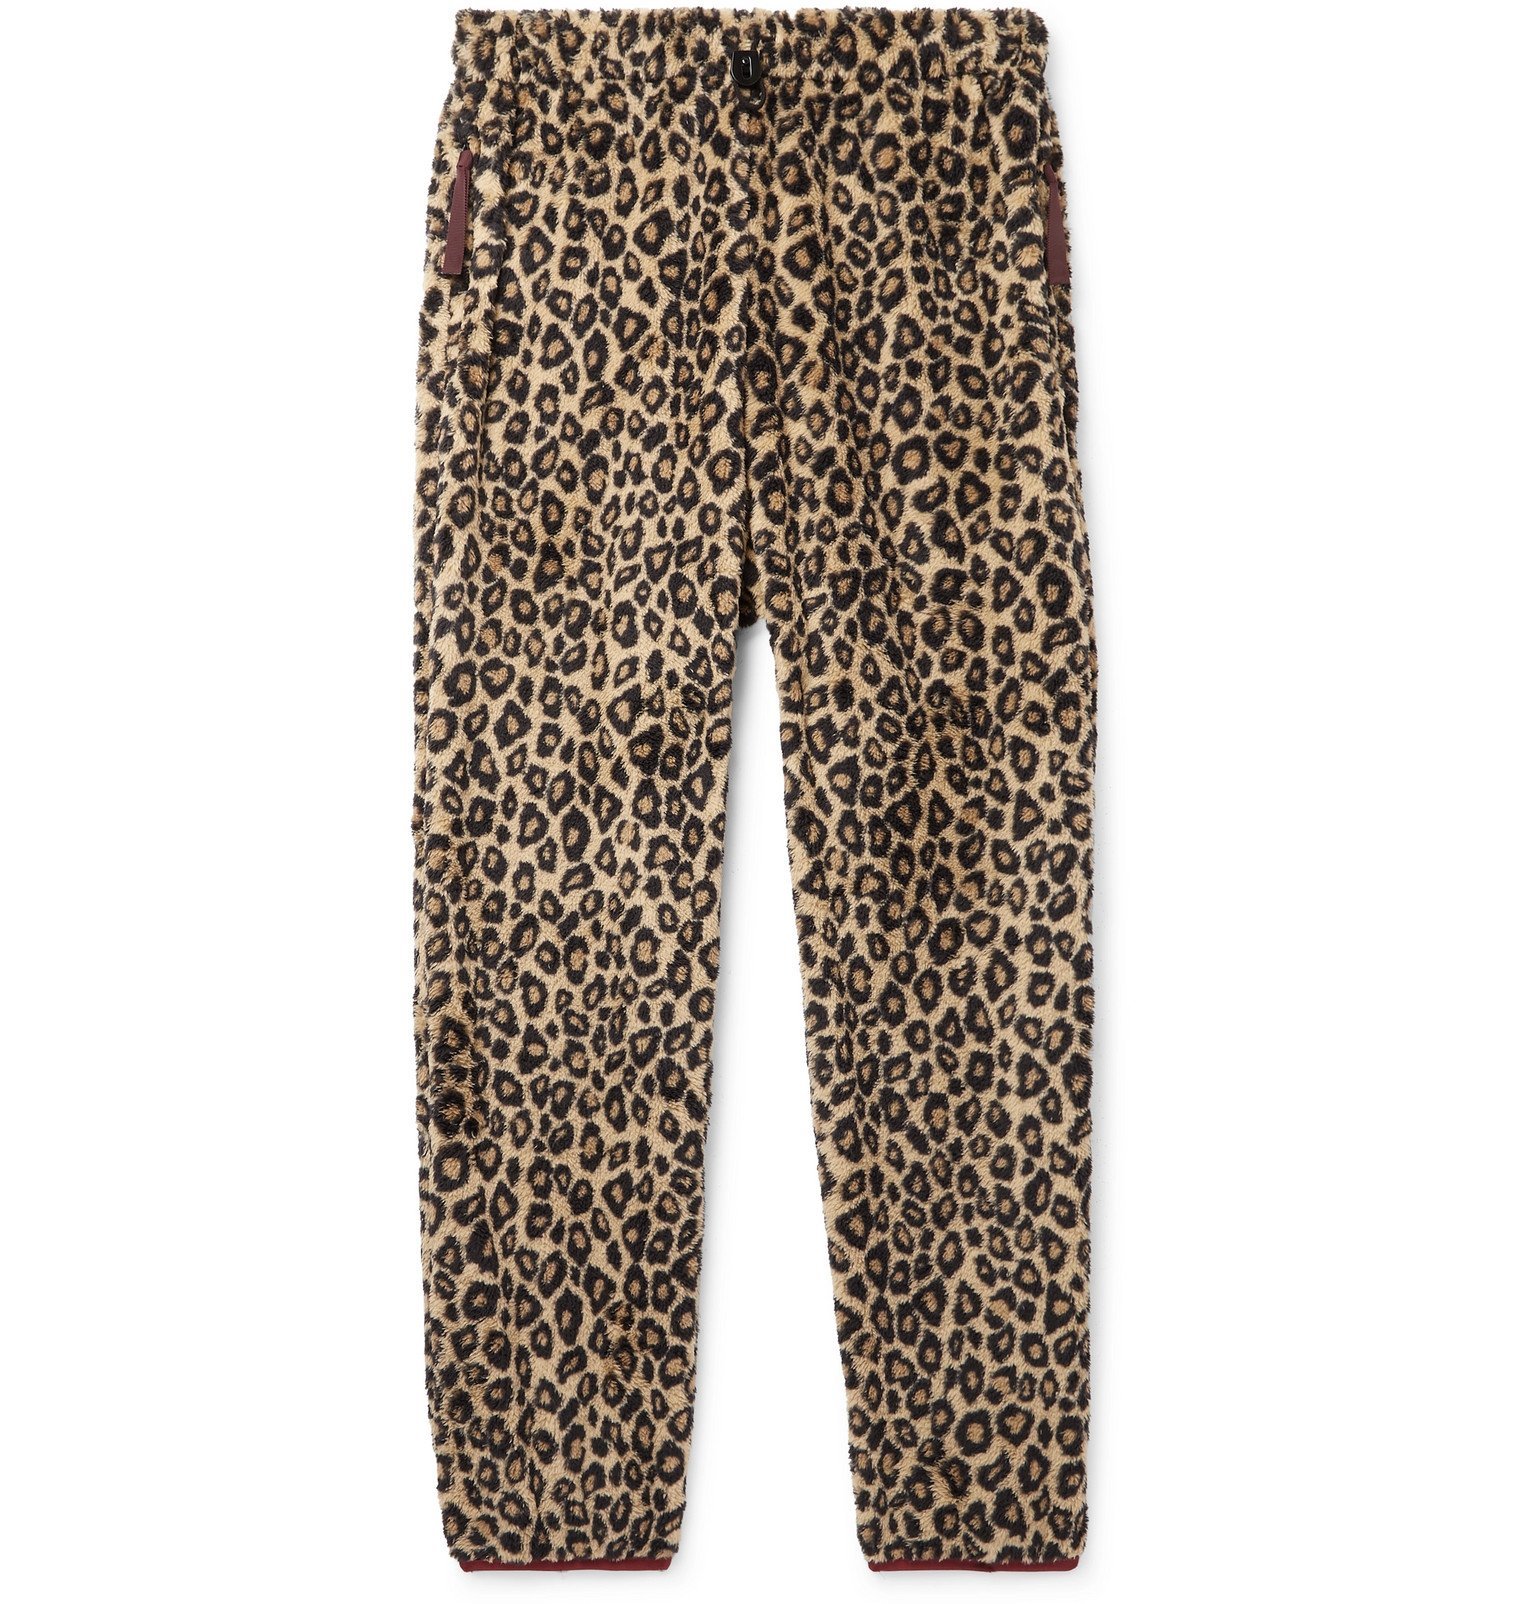 KAPITAL - Leopard-Print Fleece Drawstring Trousers - Animal print KAPITAL